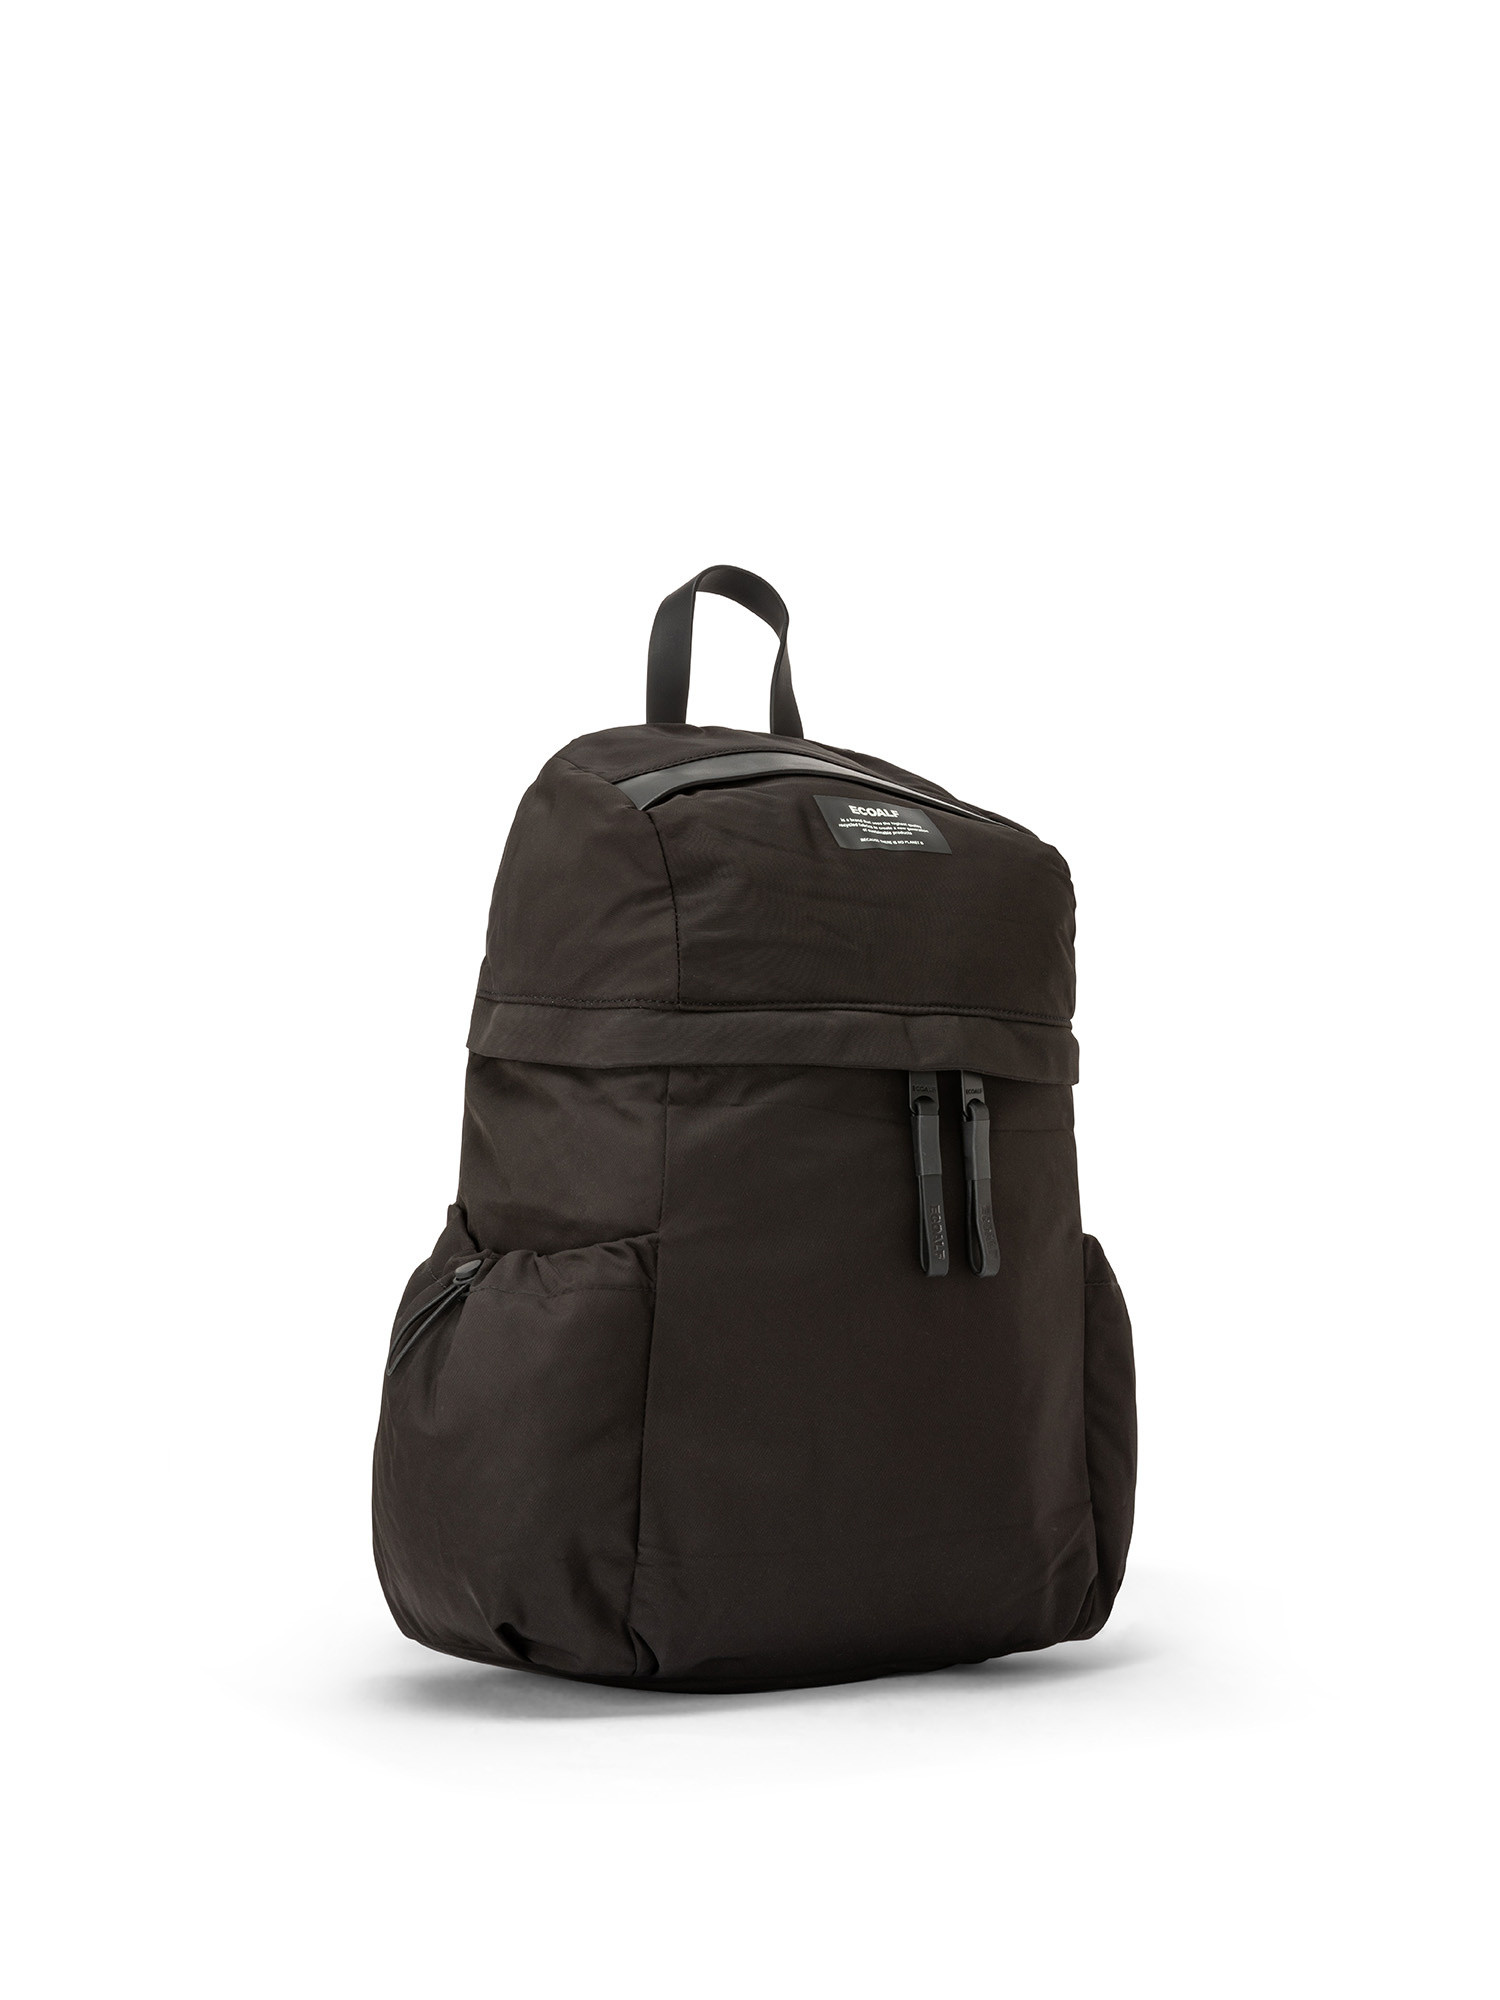 Ecoalf - Waterproof Mom Backpack, Black, large image number 1